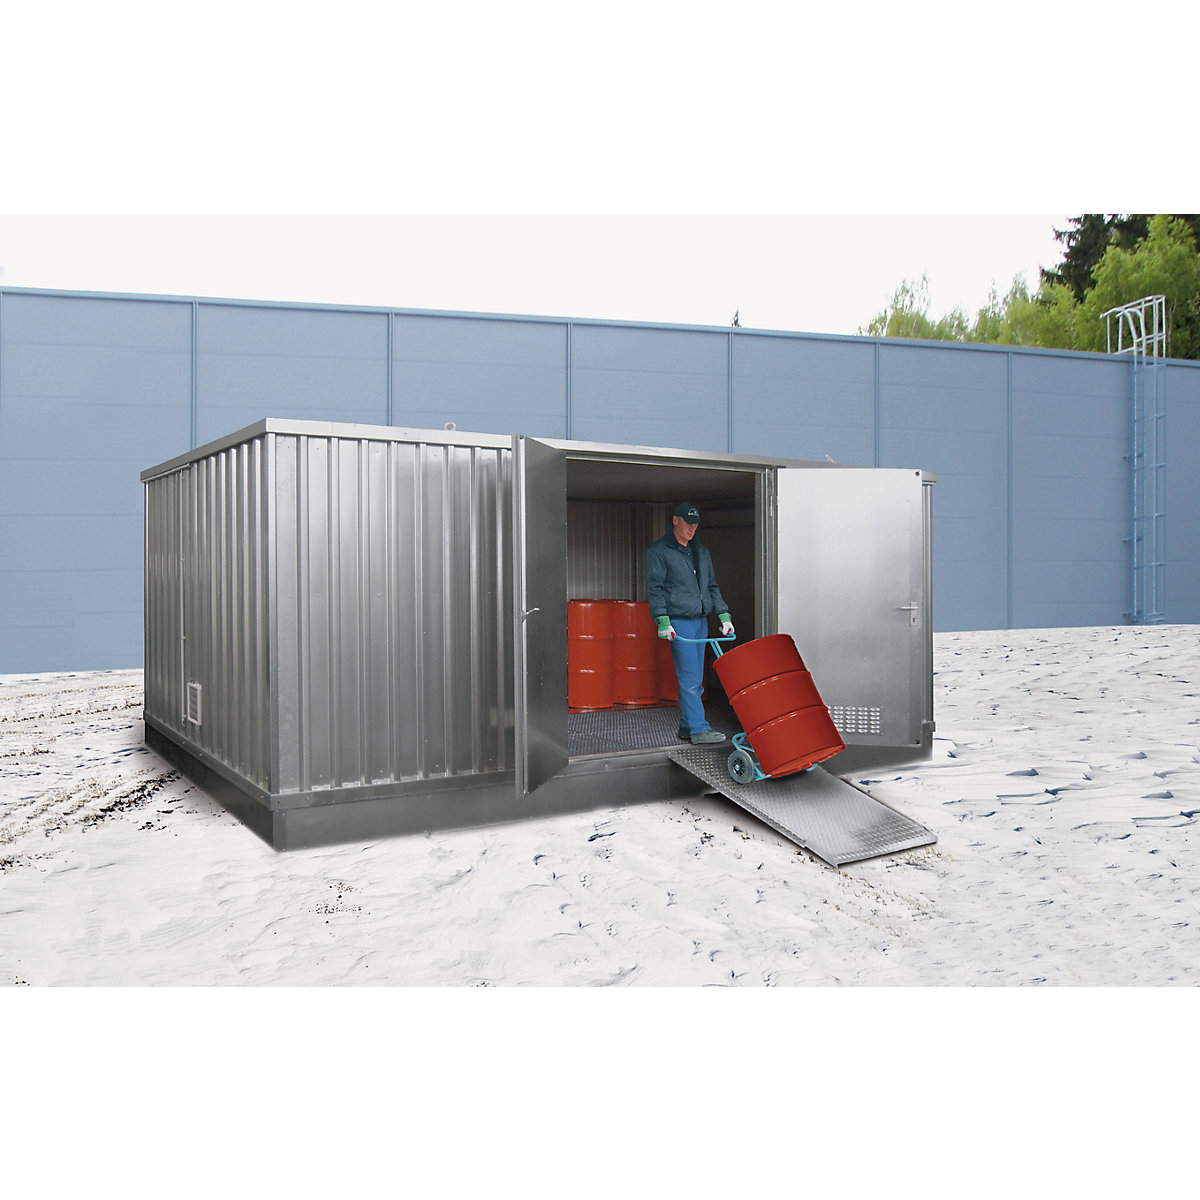 Hazardous goods storage container for water hazardous media, cold-insulated - LaCont